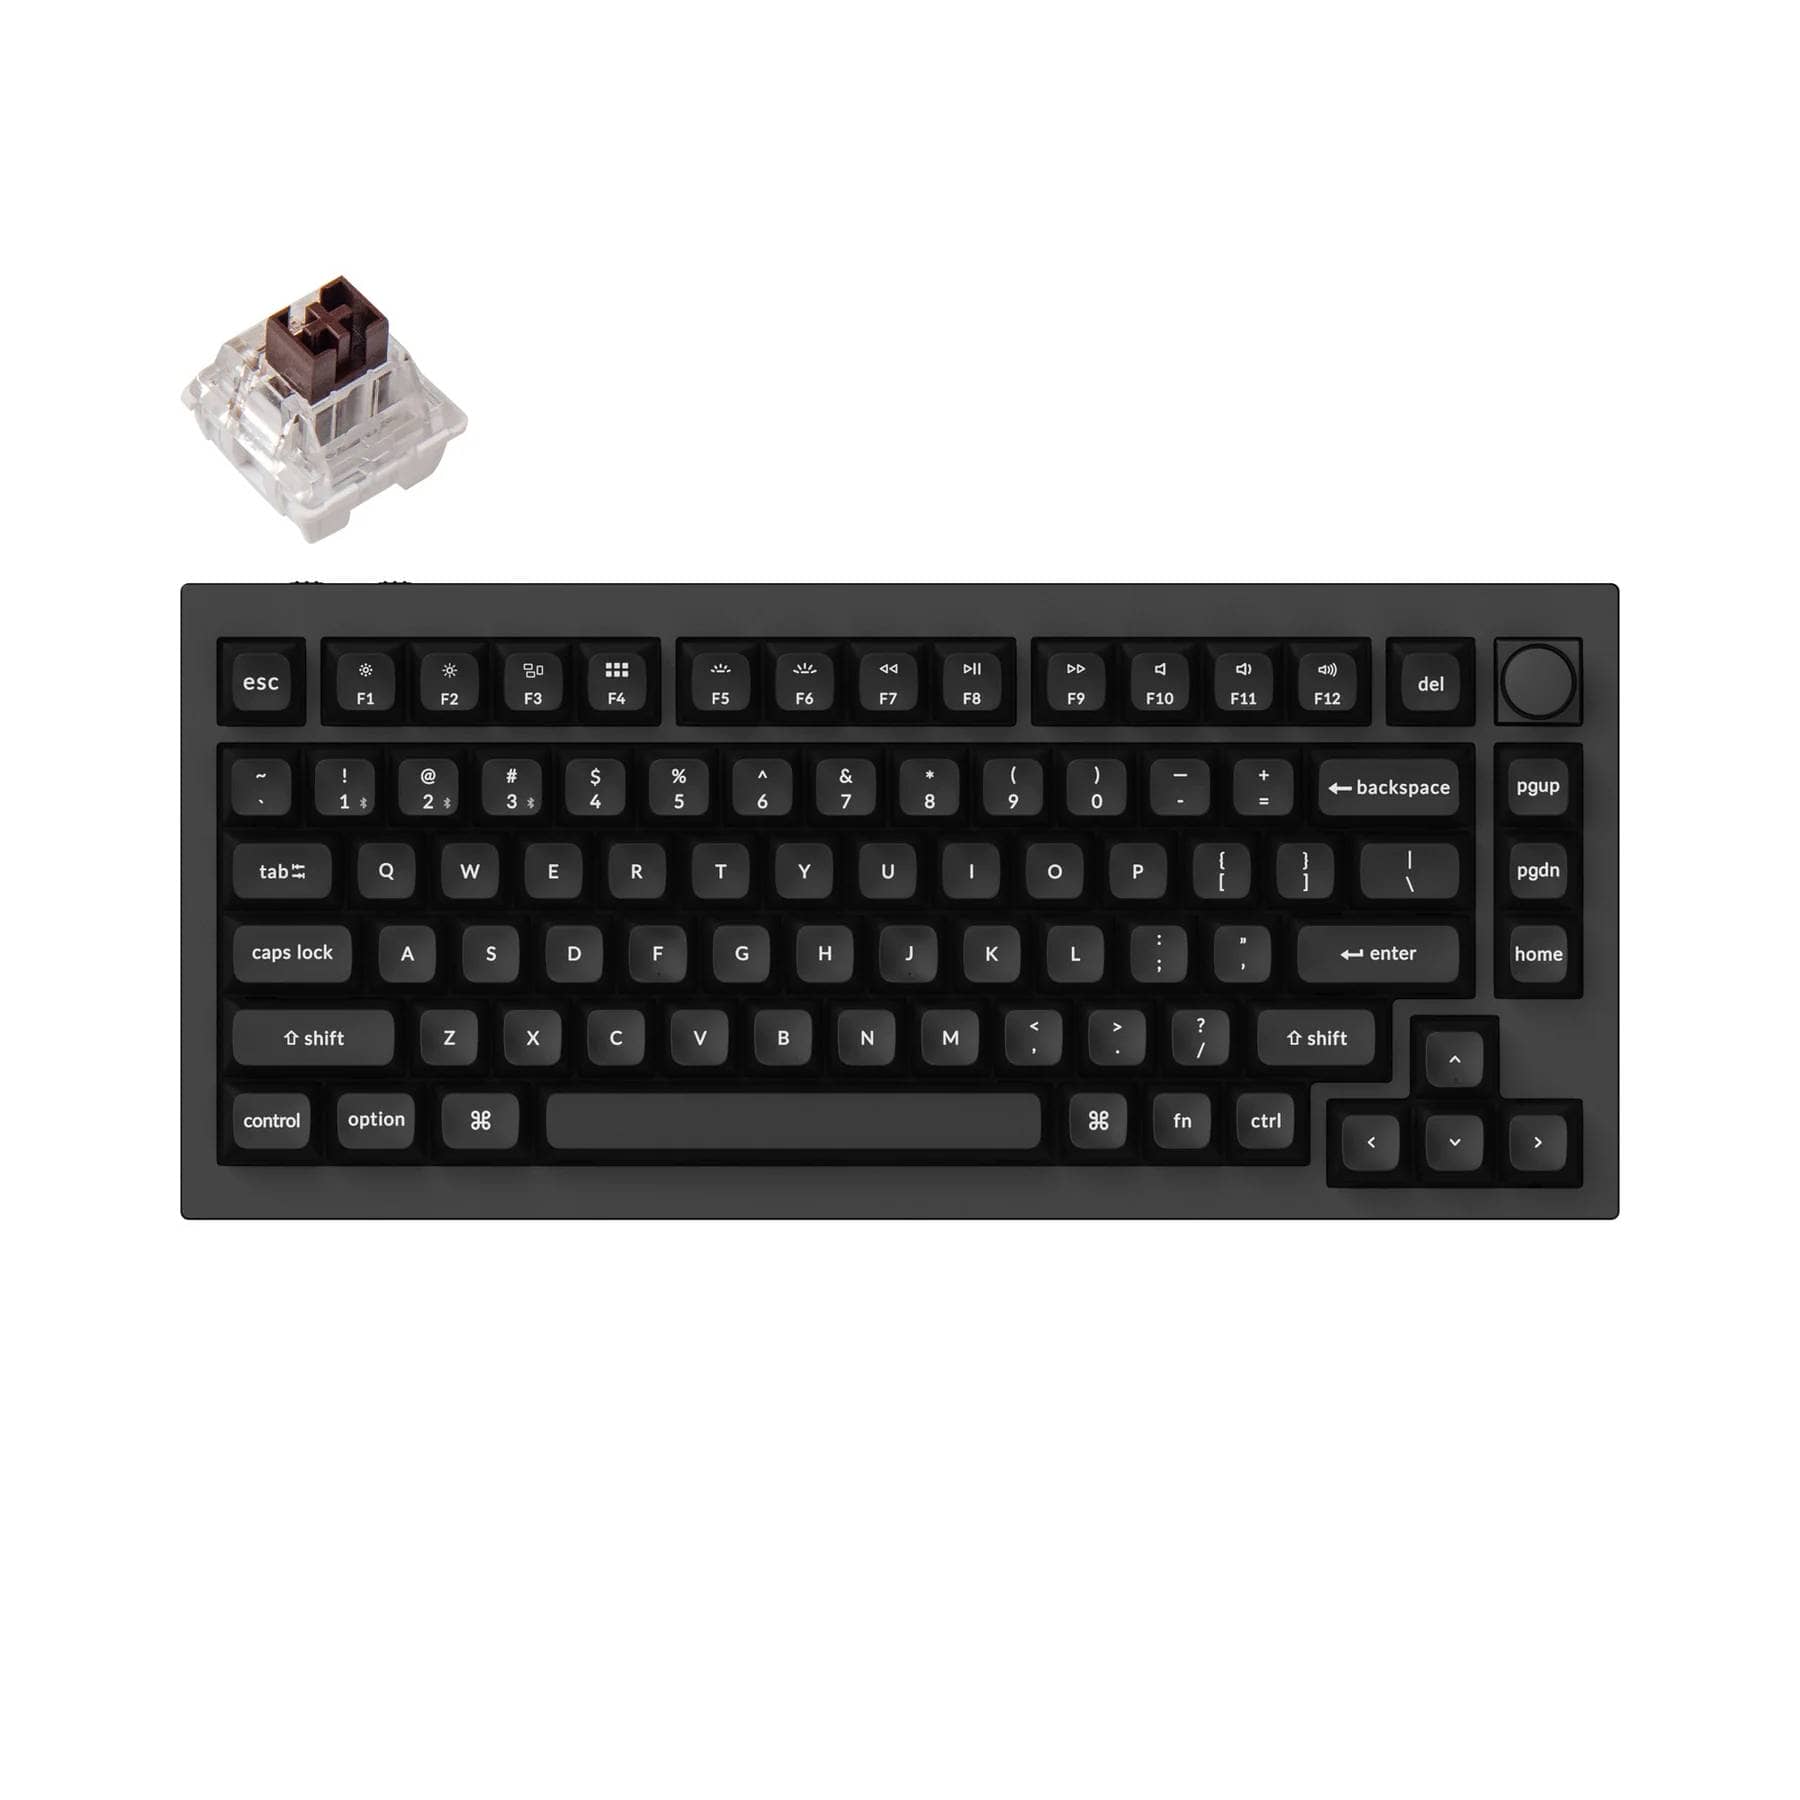 Keychron Q1 Pro QMK VIA wireless custom mechanical keyboard 75 percent layout aluminum black keycaps for Mac WIndows Linux RGB backlight hot swappable K Pro